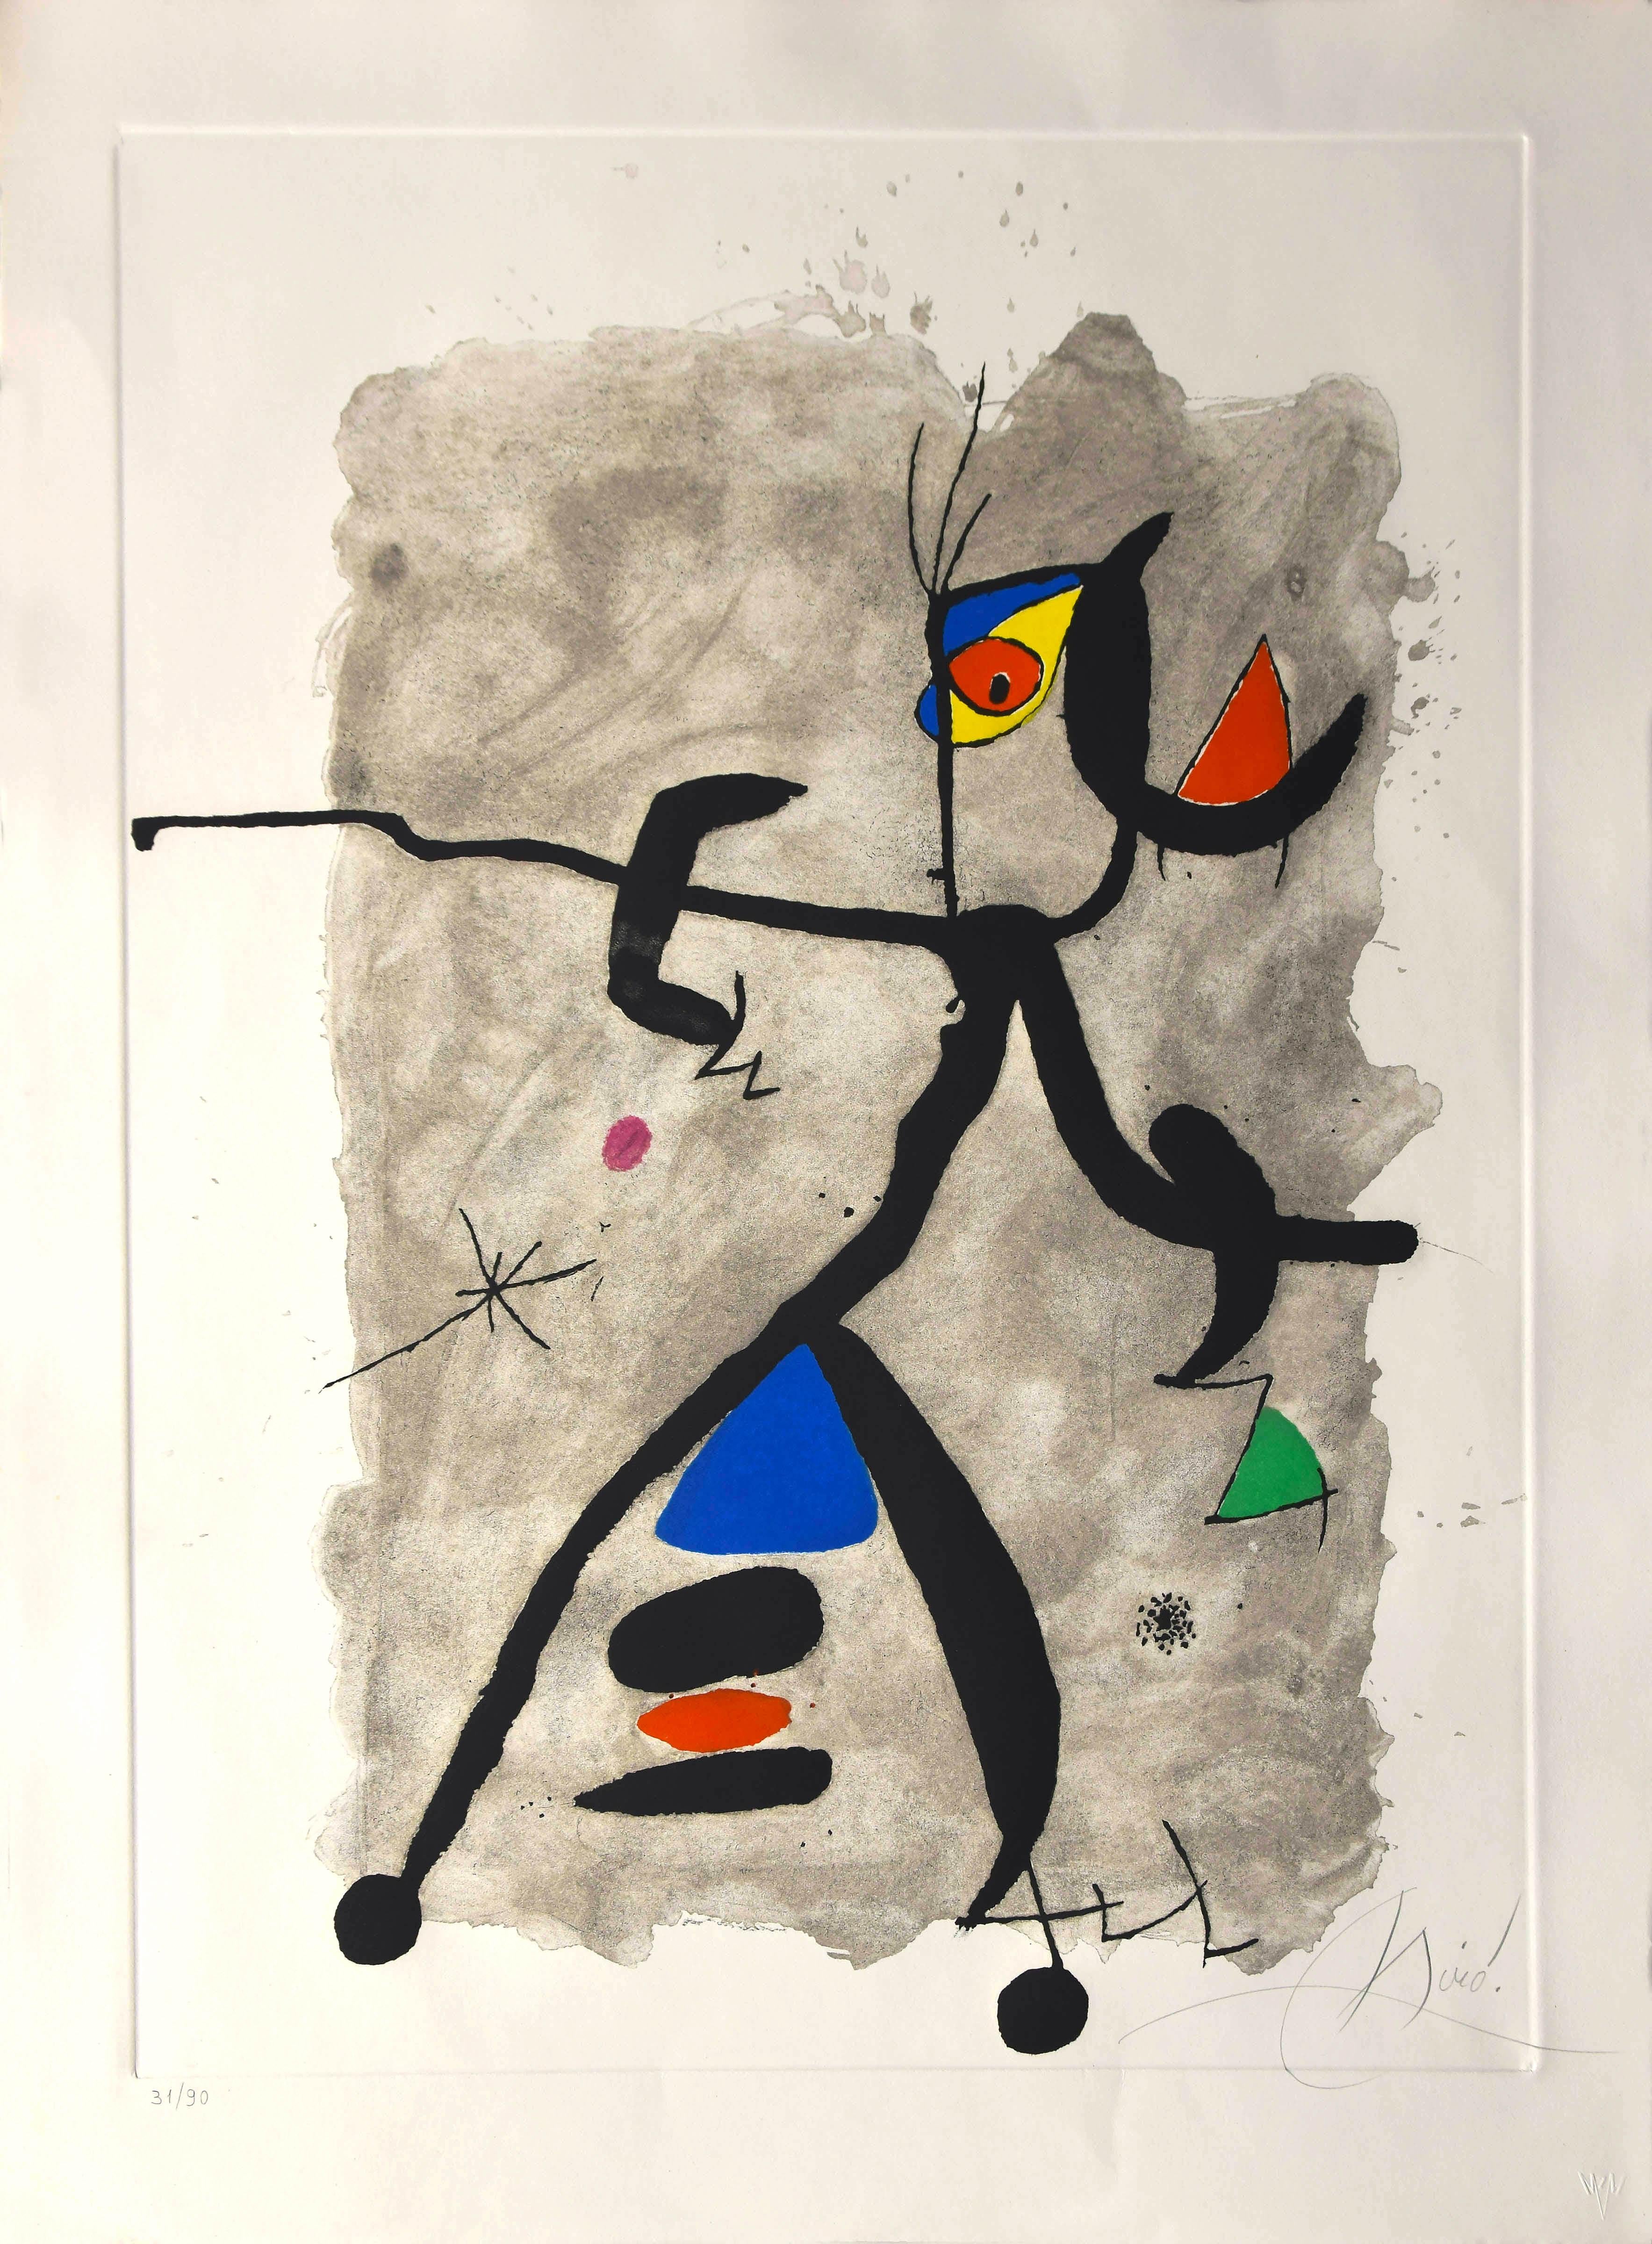 Joan Miró Abstract Print - Constellation III - Original Etching by Joan Mir�ò - 1975